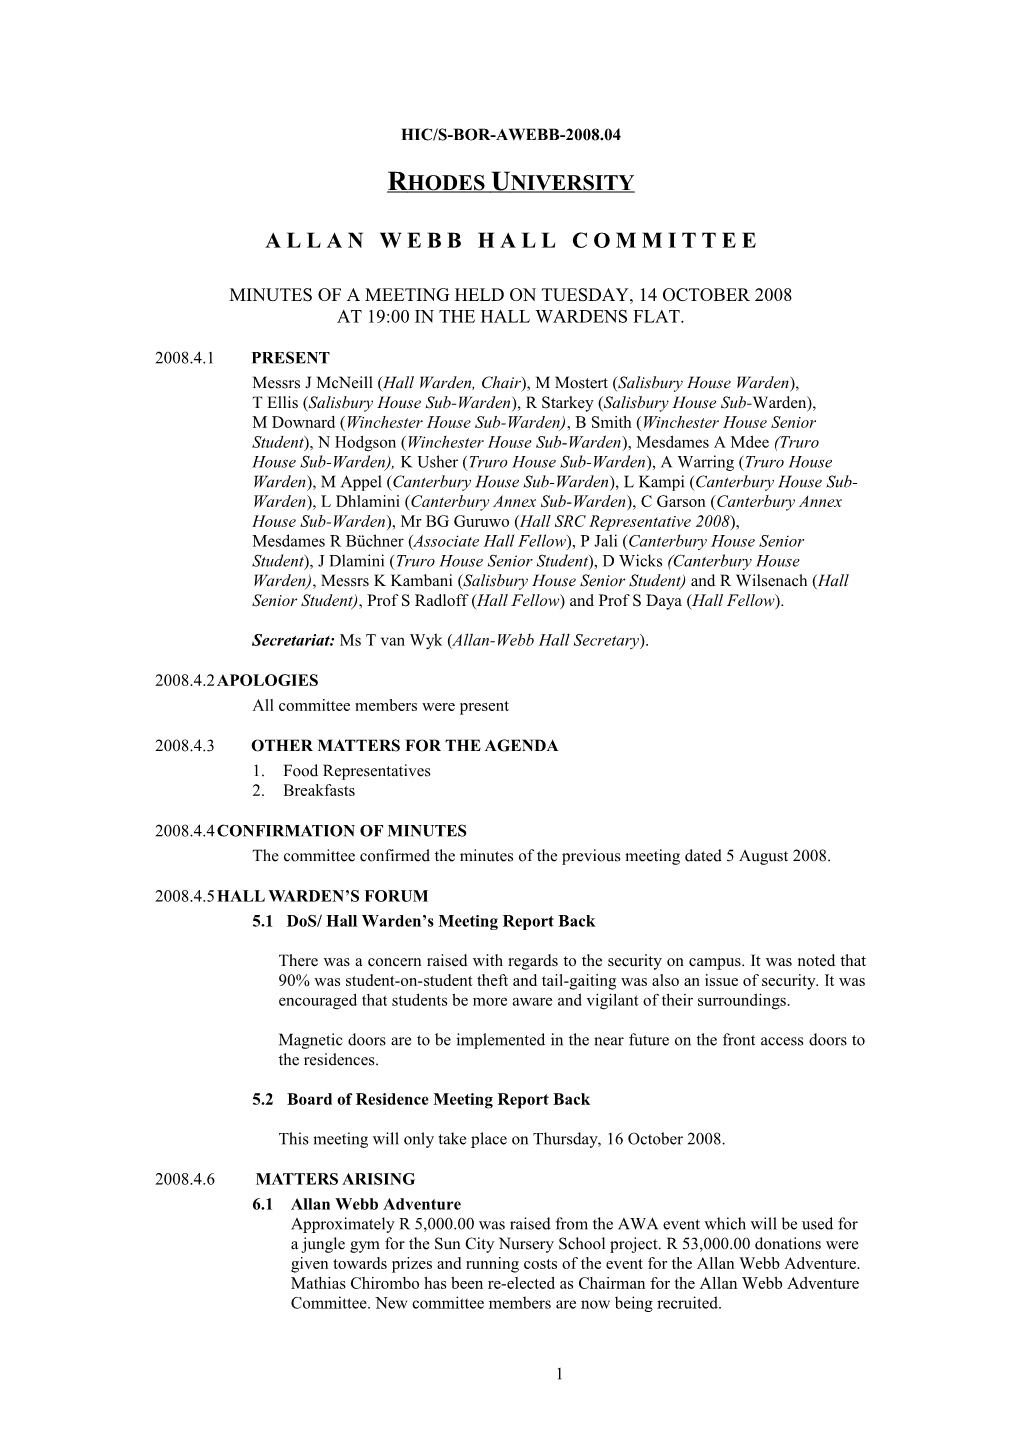 Allan Webb Hall Committee